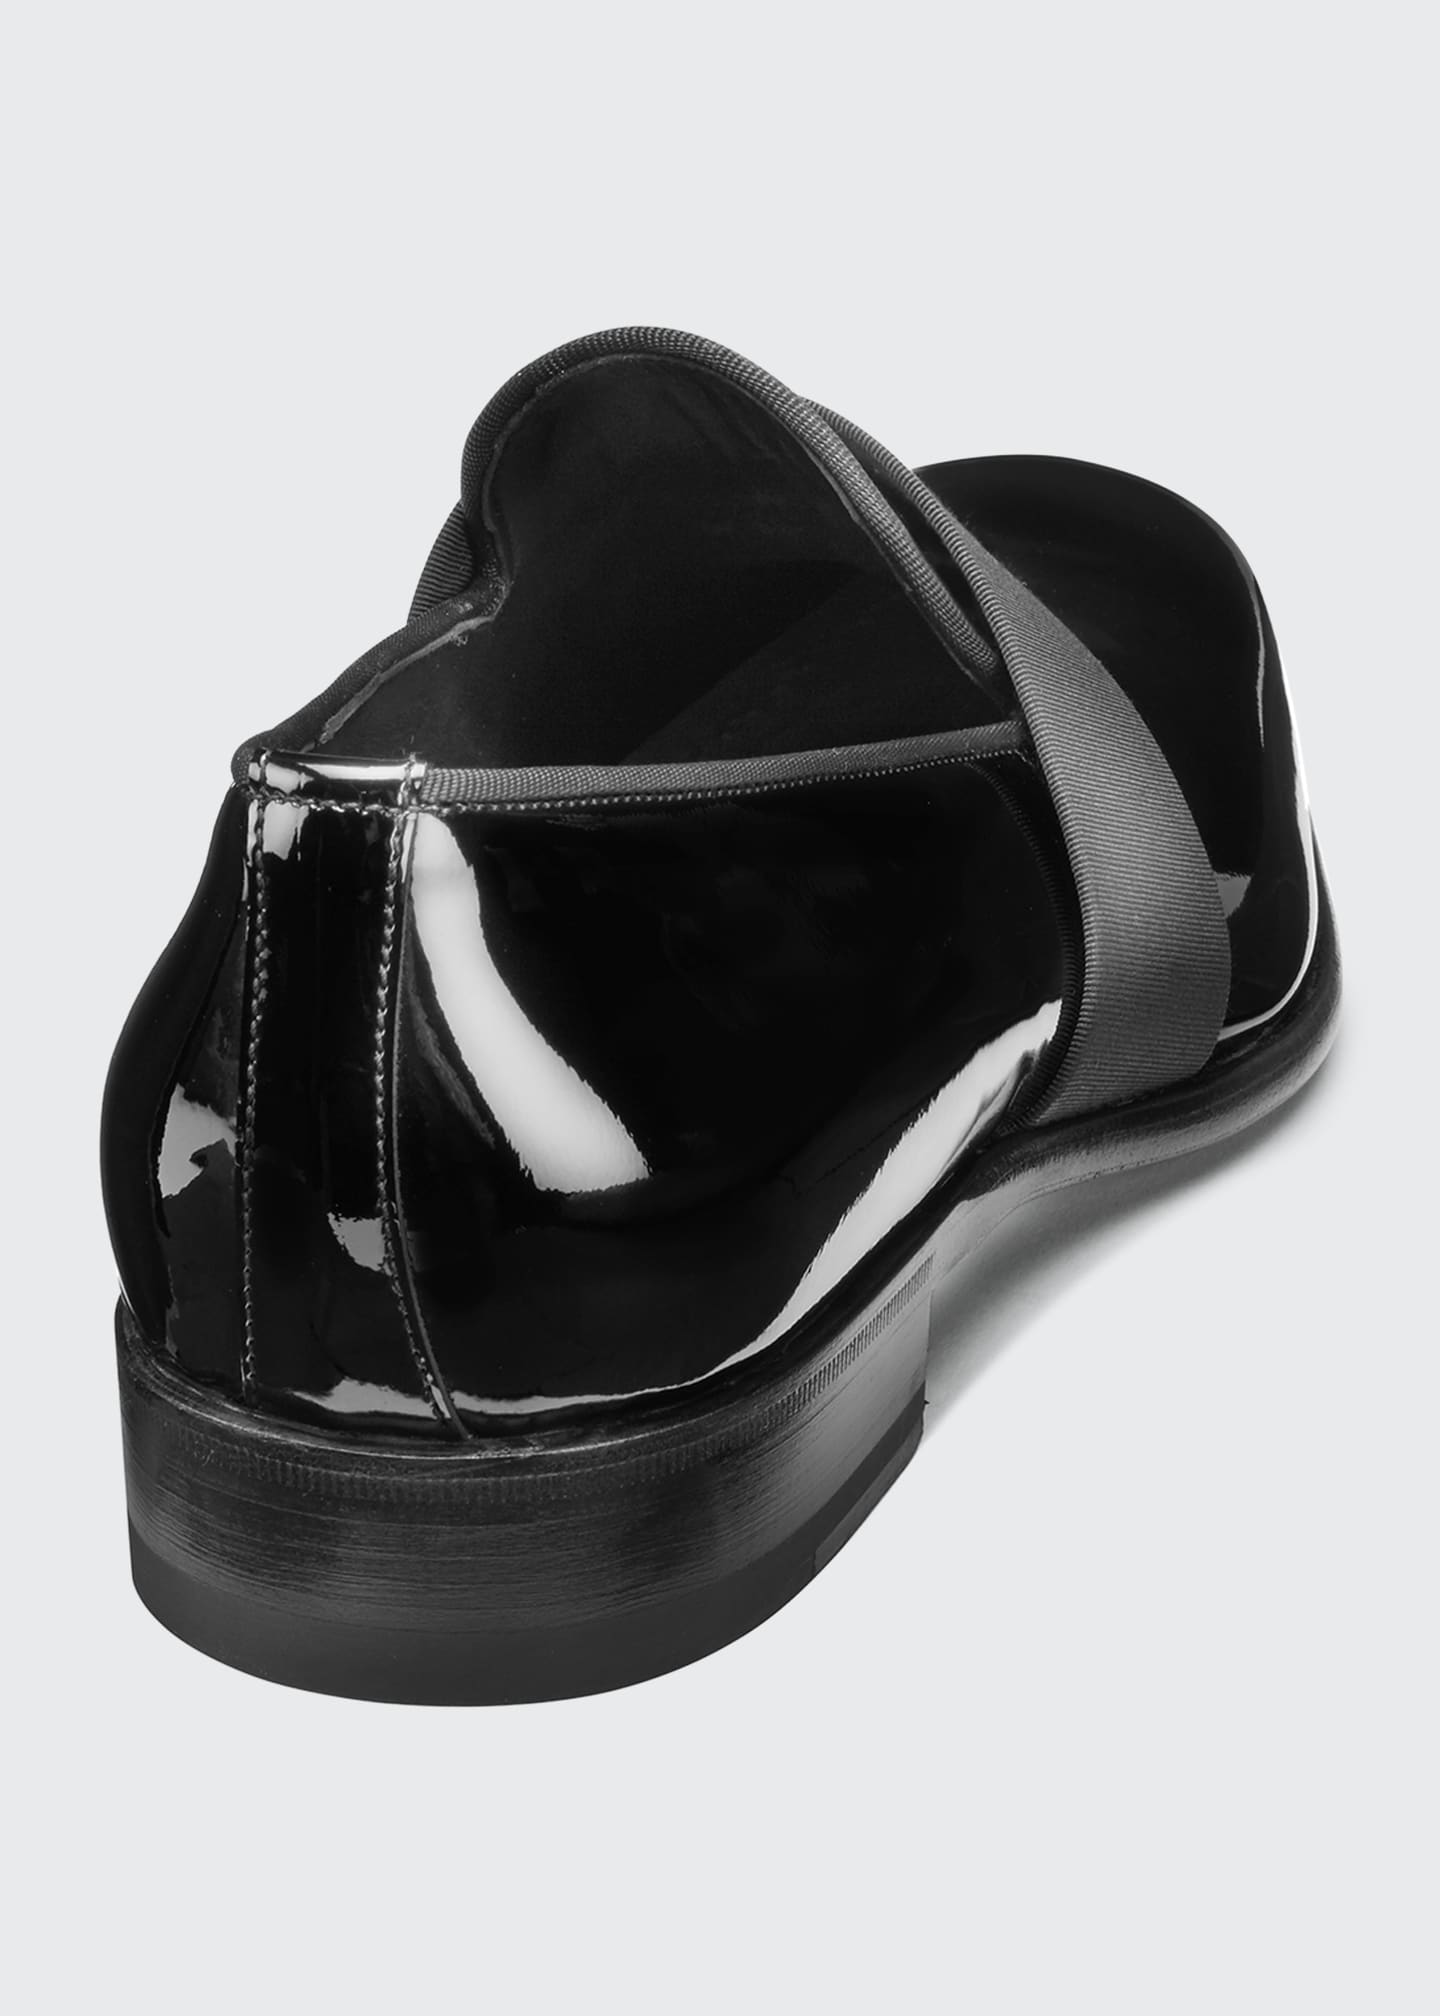 Santoni Men's Patent Leather Dress Loafers - Bergdorf Goodman